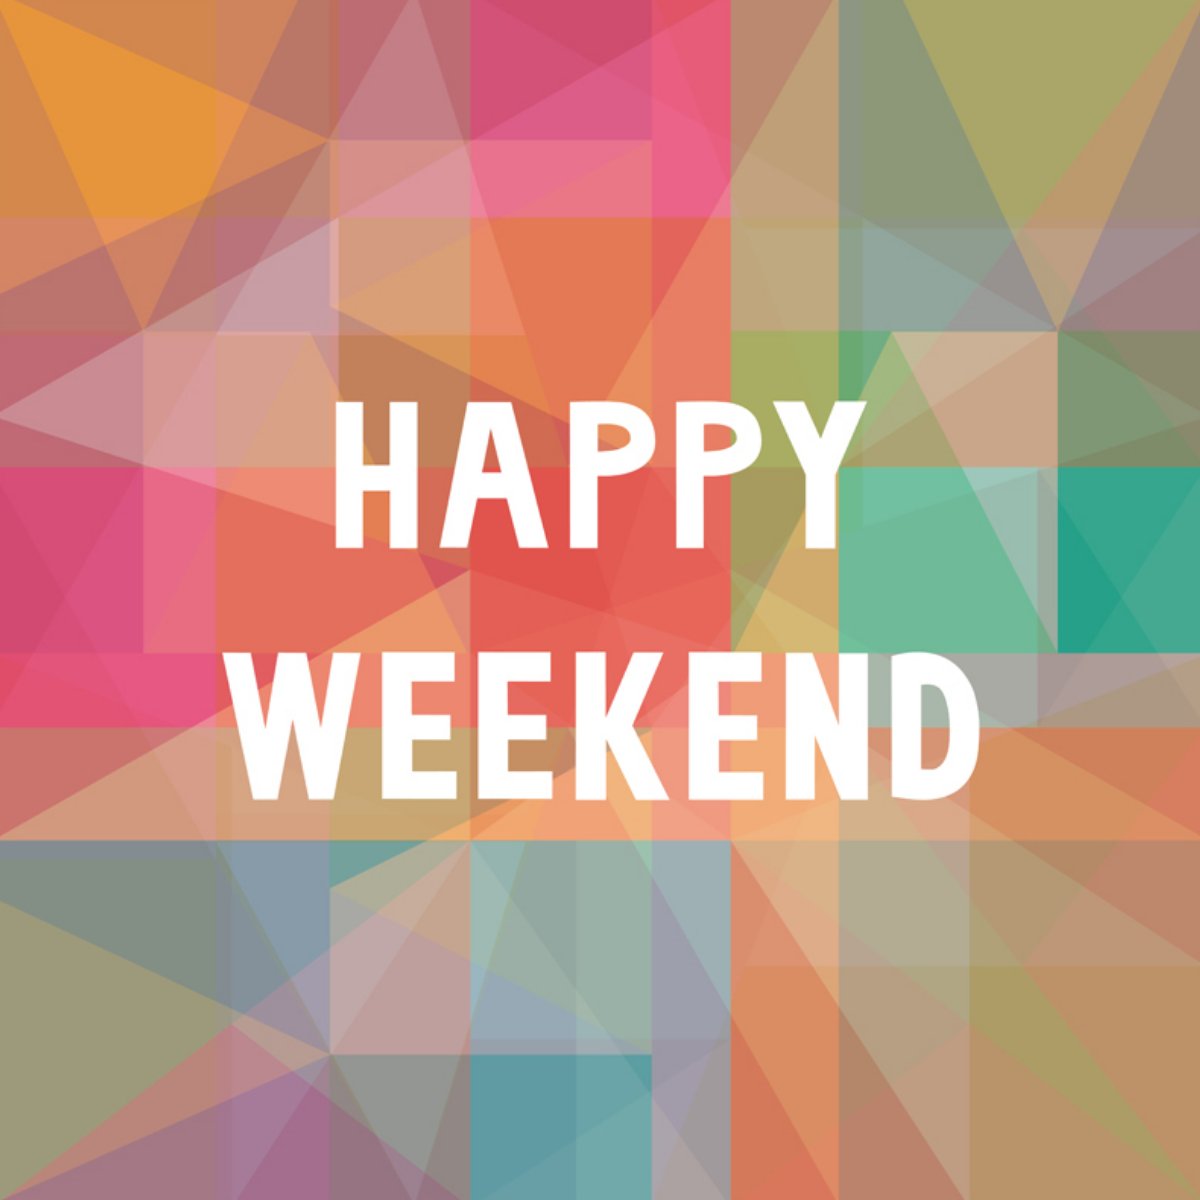 Happy Weekend!  Enjoy your day 😎☀️

#SGPNOW #Summer #SummerWeekend #Sunday #Relax